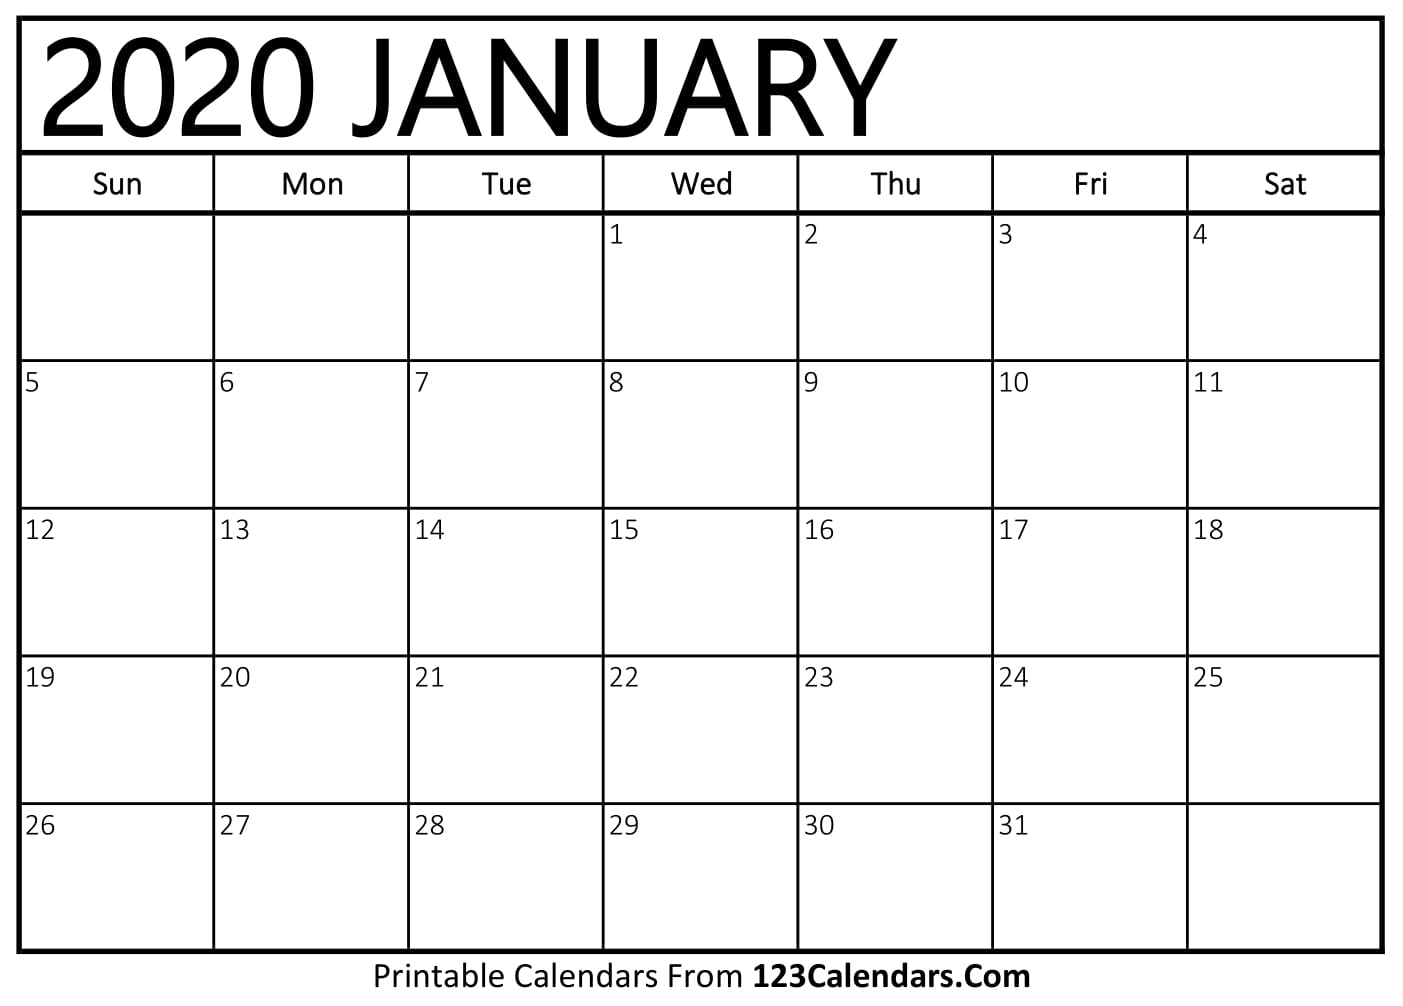 Free Printable Calendar | 123Calendars regarding Printable Calendars From 123Calendars